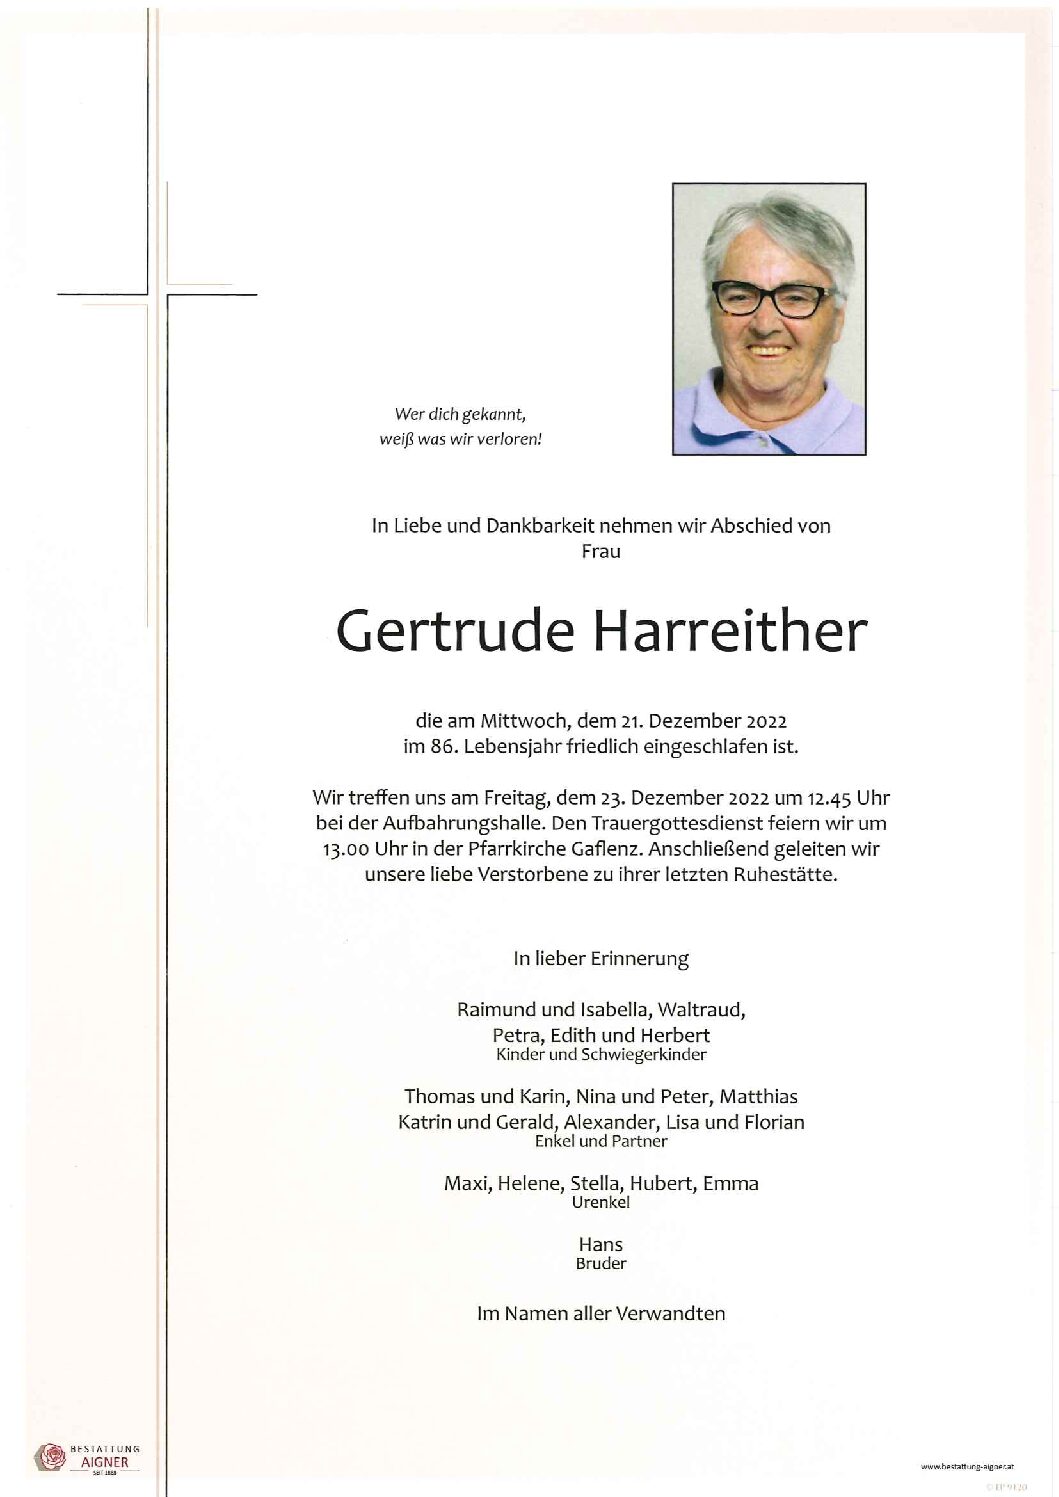 Gertrude Harreither